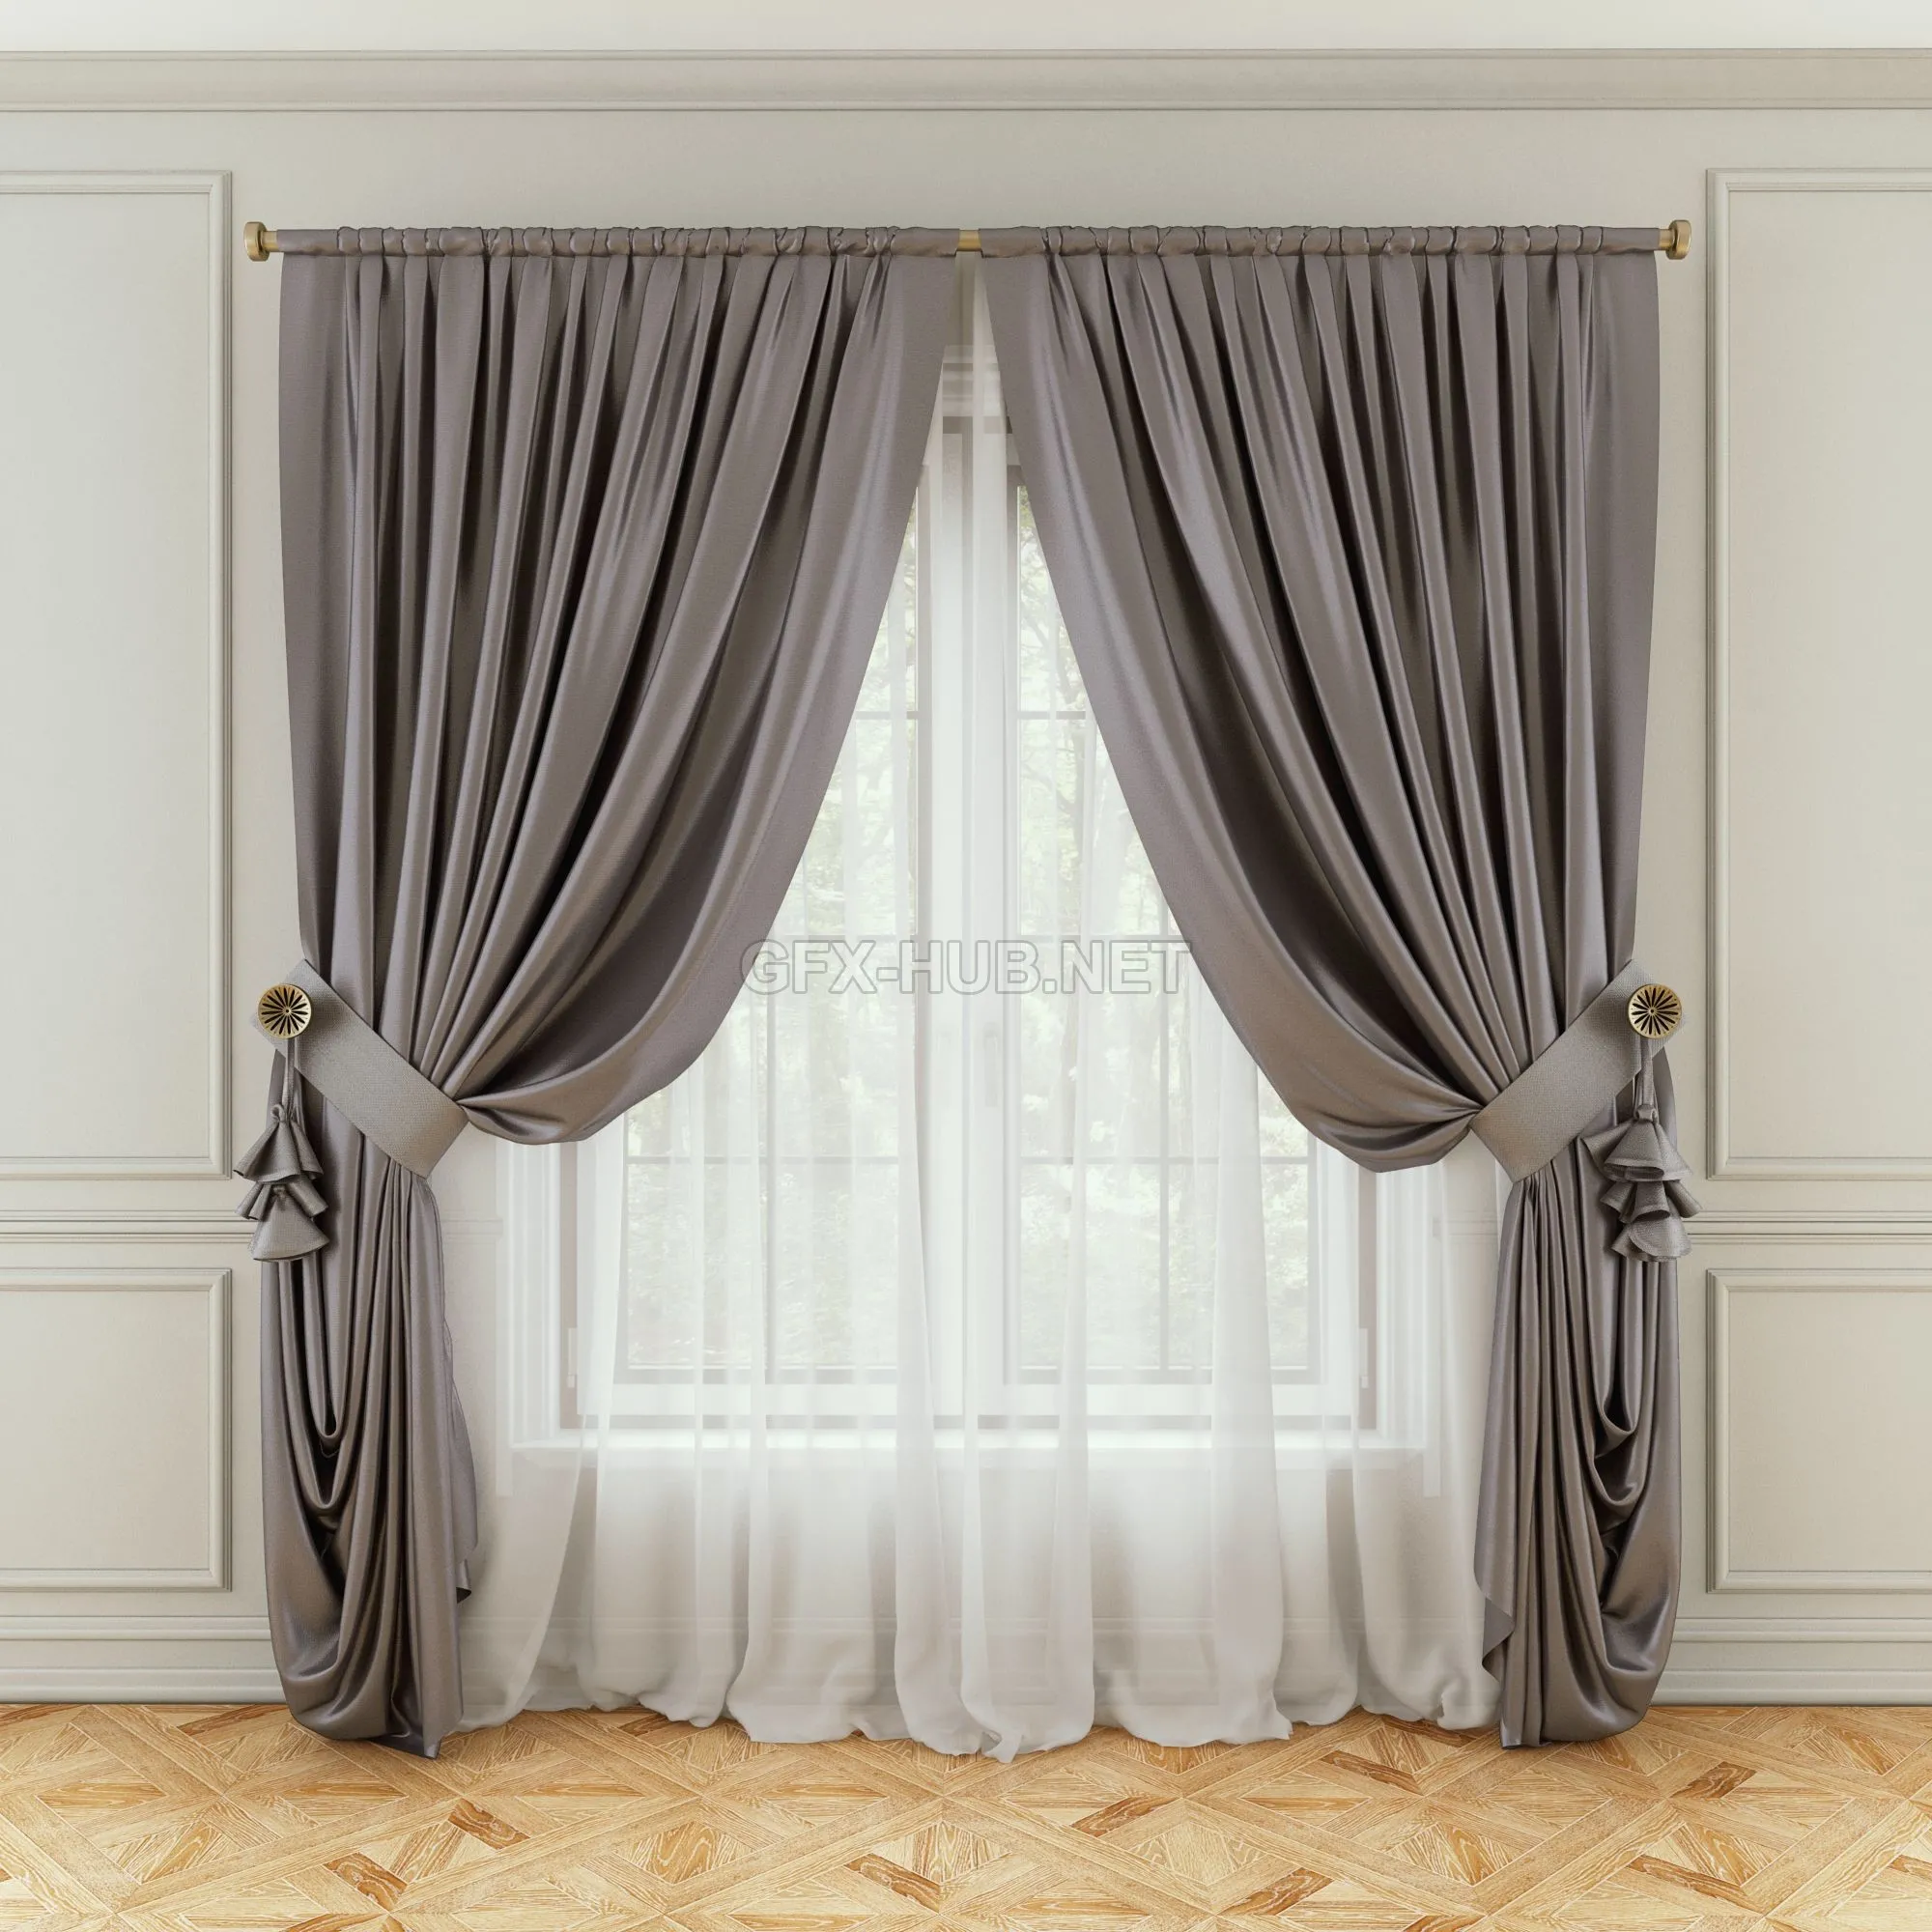 FURNITURE 3D MODELS – Elegant curtains with pick-up